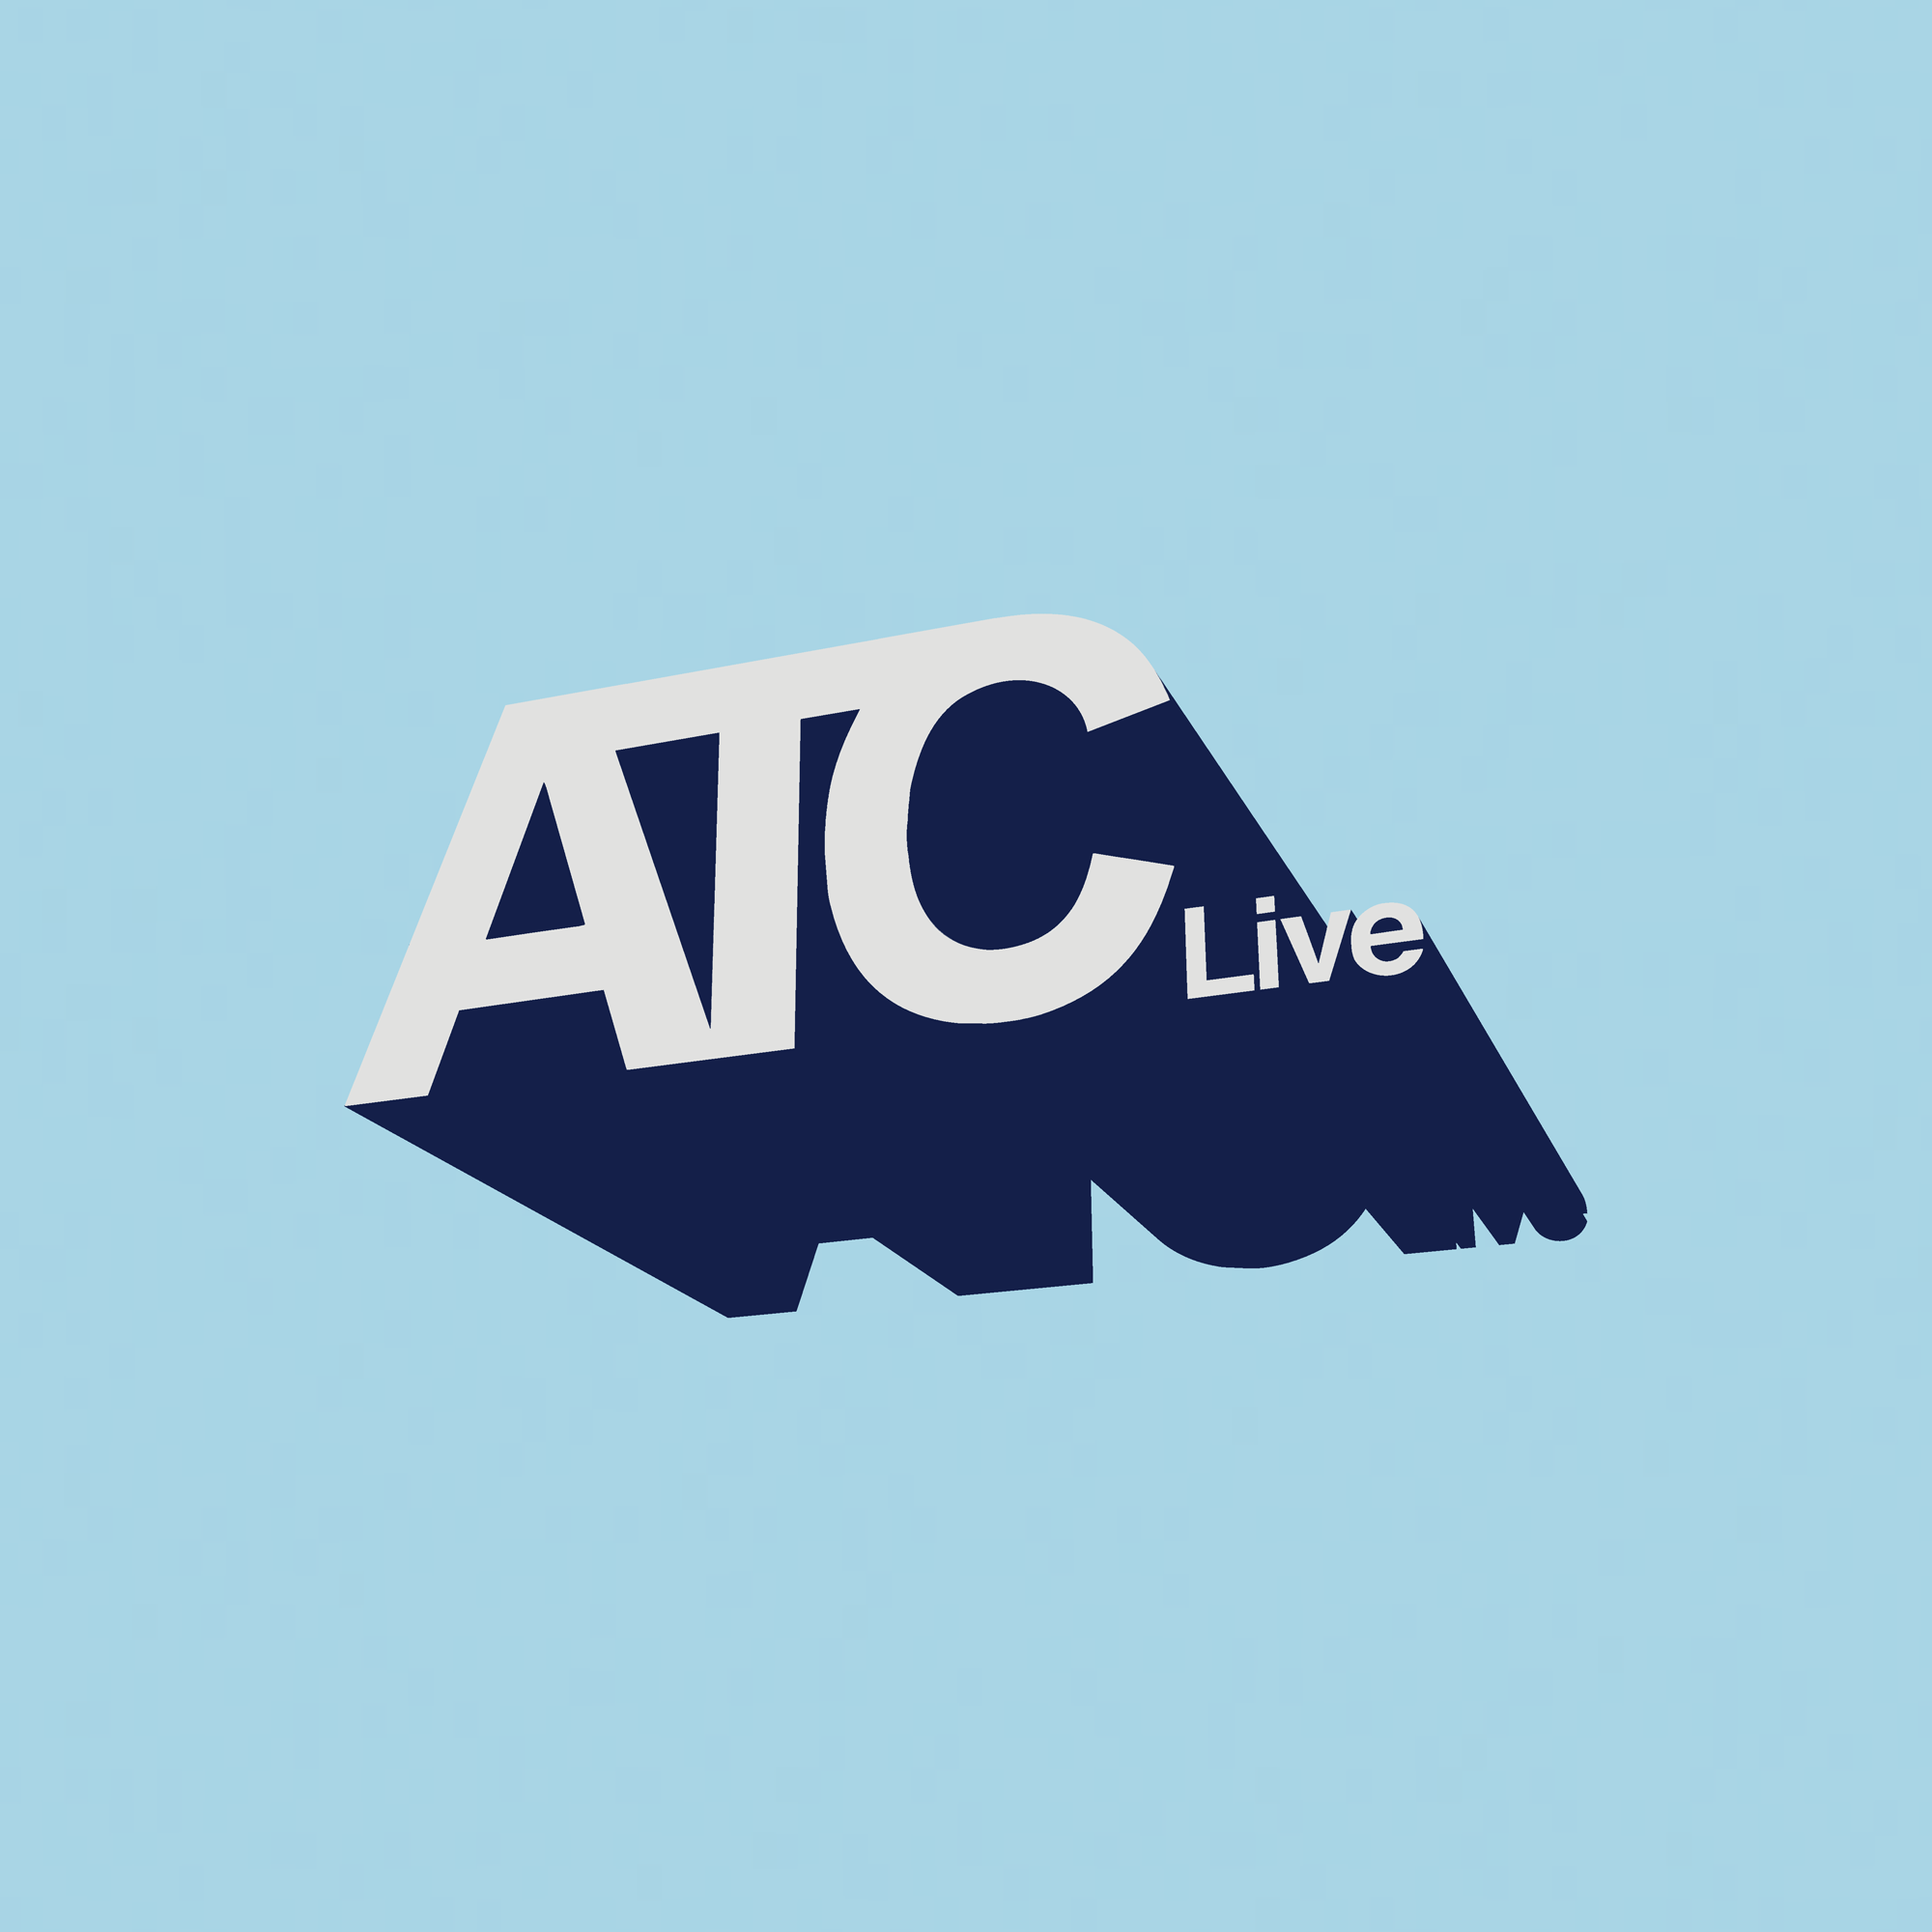 ATC Live @ SC24!